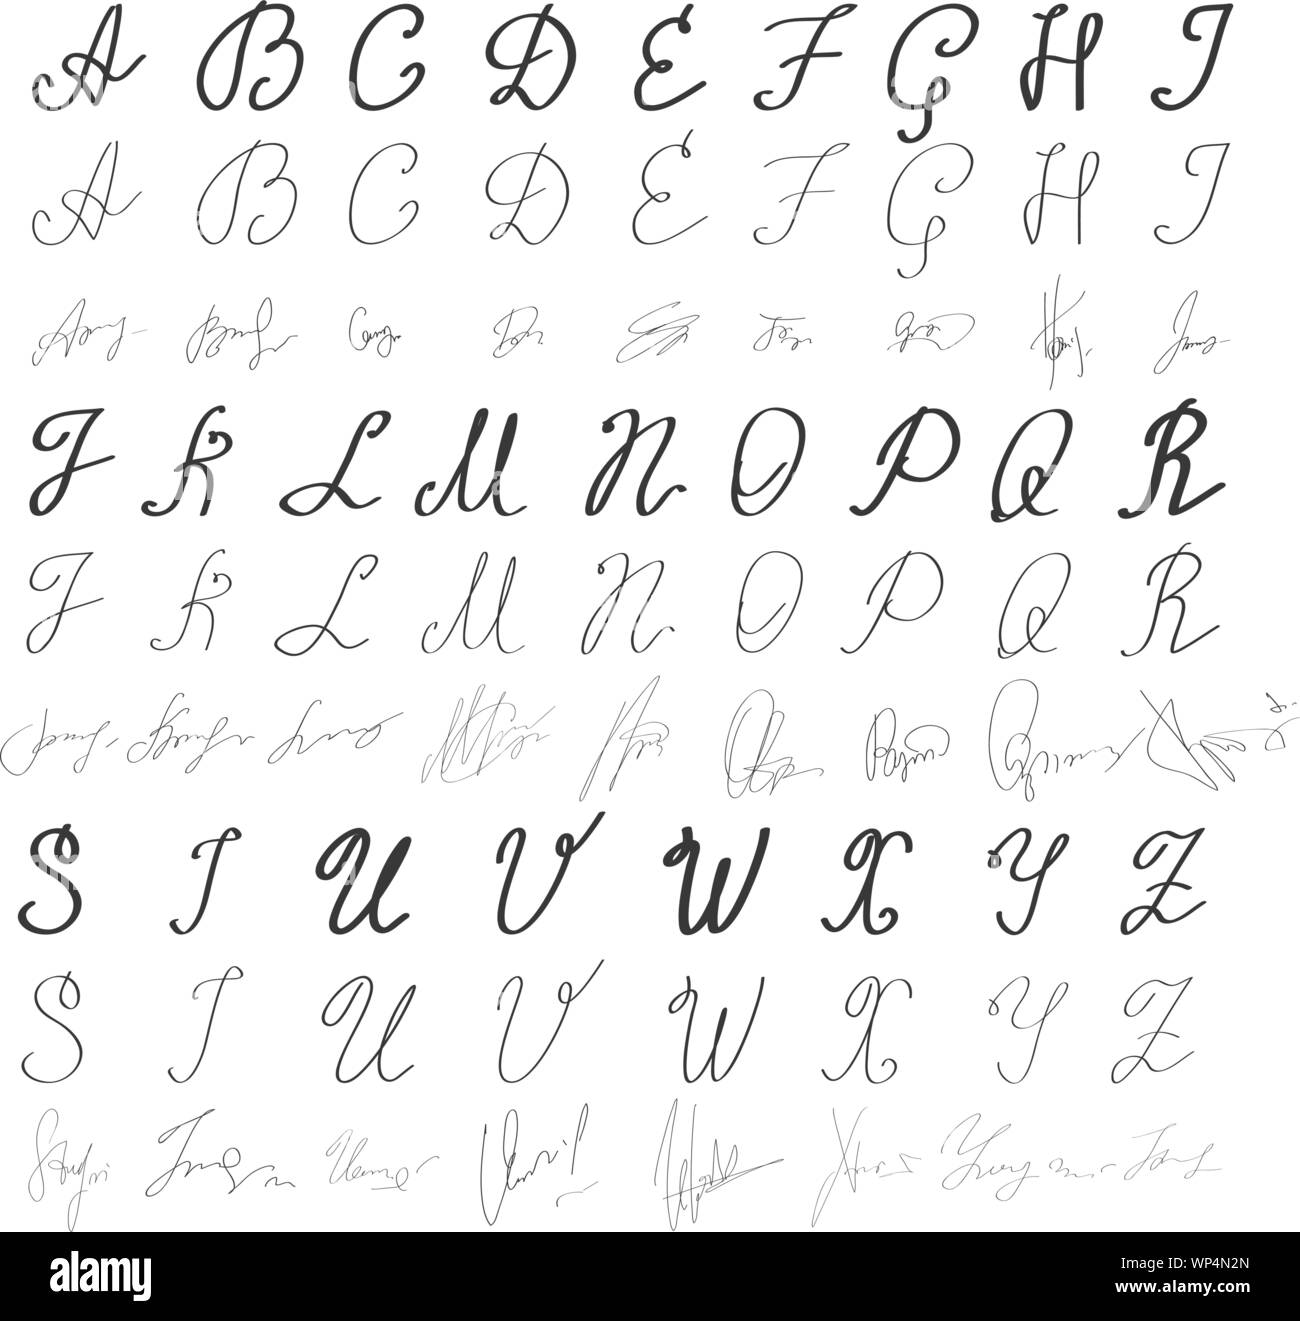 Printable Font Modern Calligraphy Style Alphabet_23587